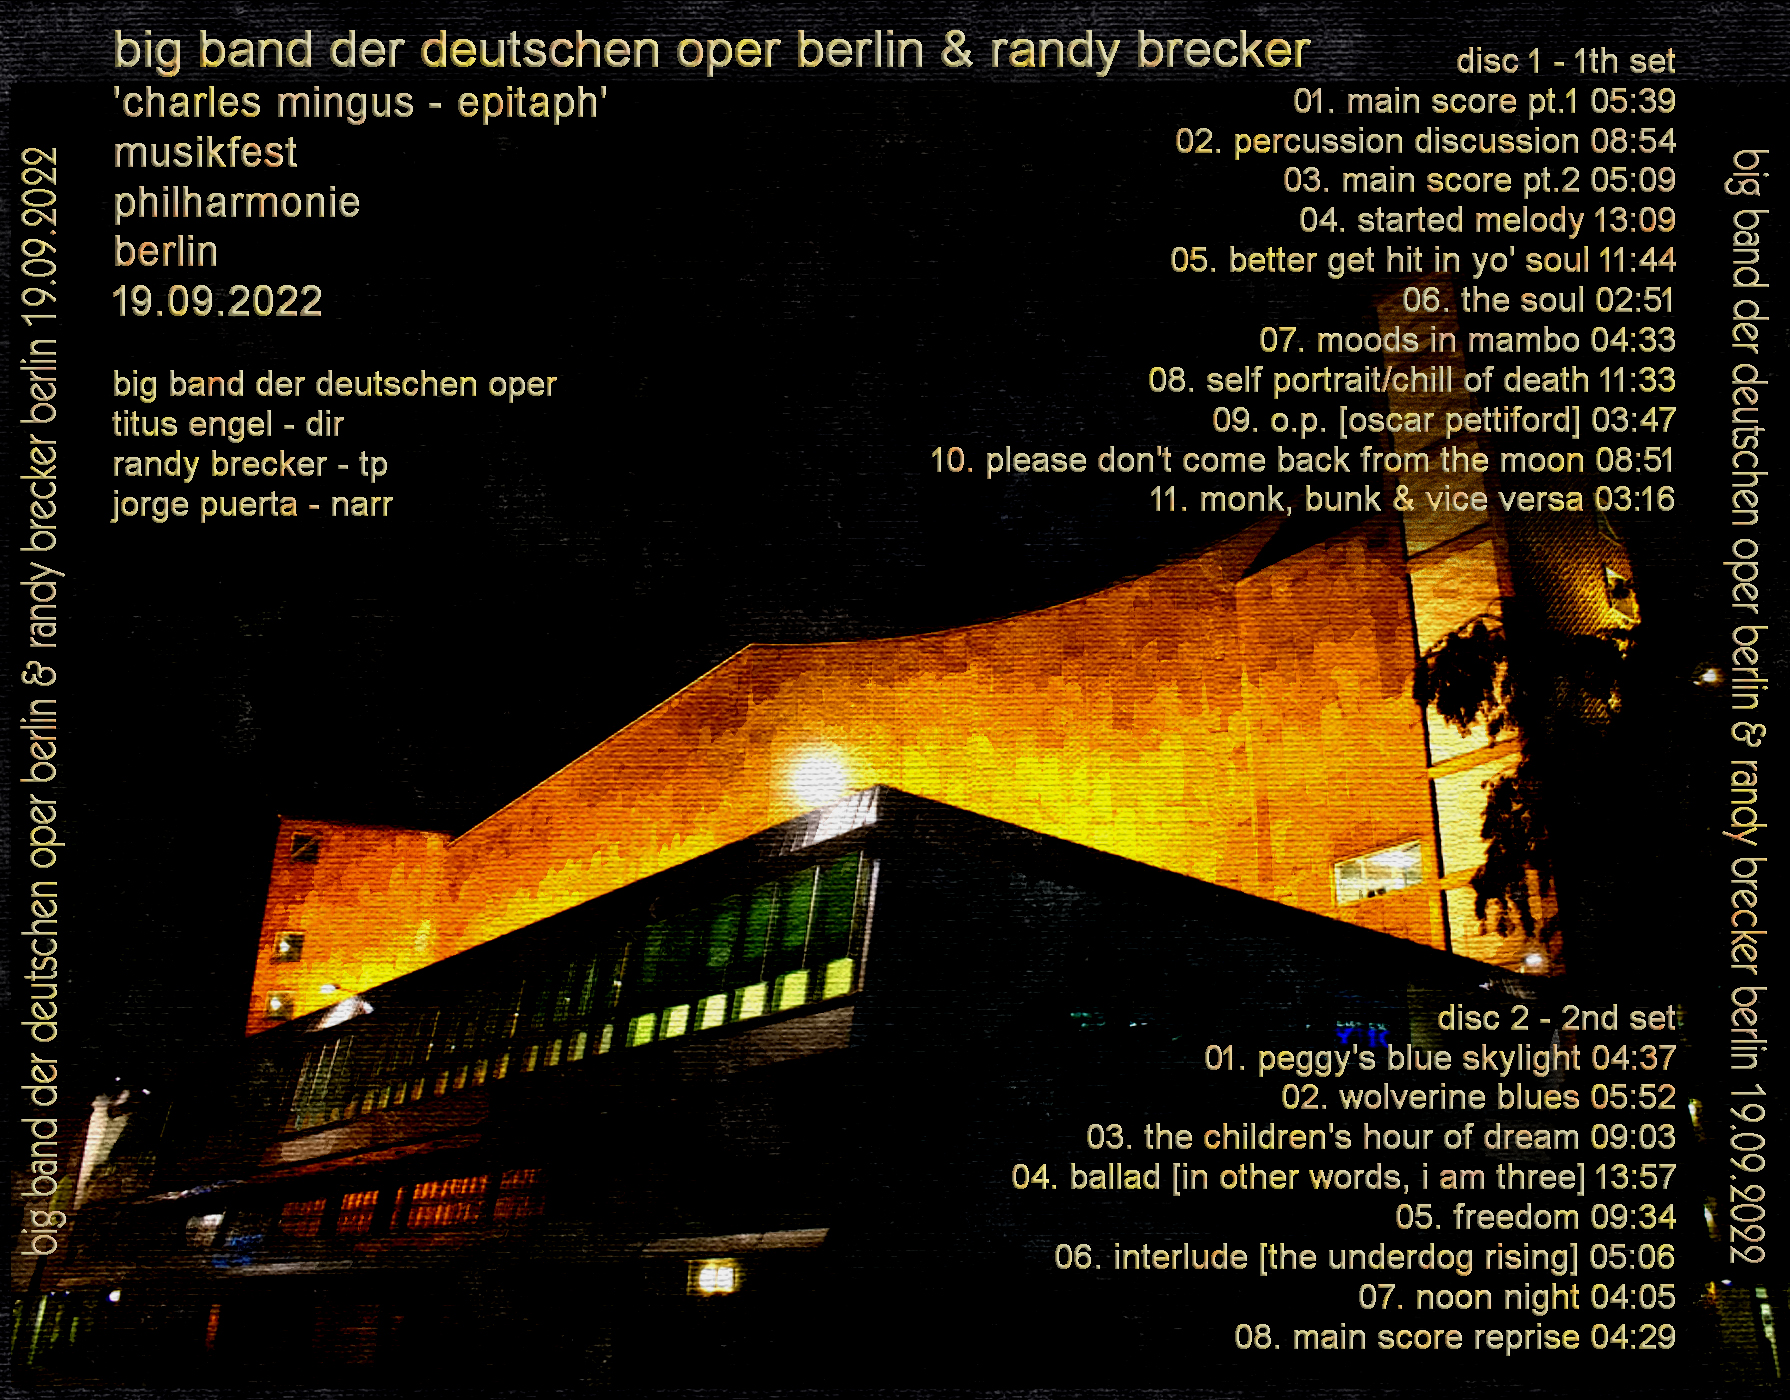 RandyBreckerAndBigBandDerDeutschenOper2022-09-19PhilharmonieBerlinGermany (3).jpg